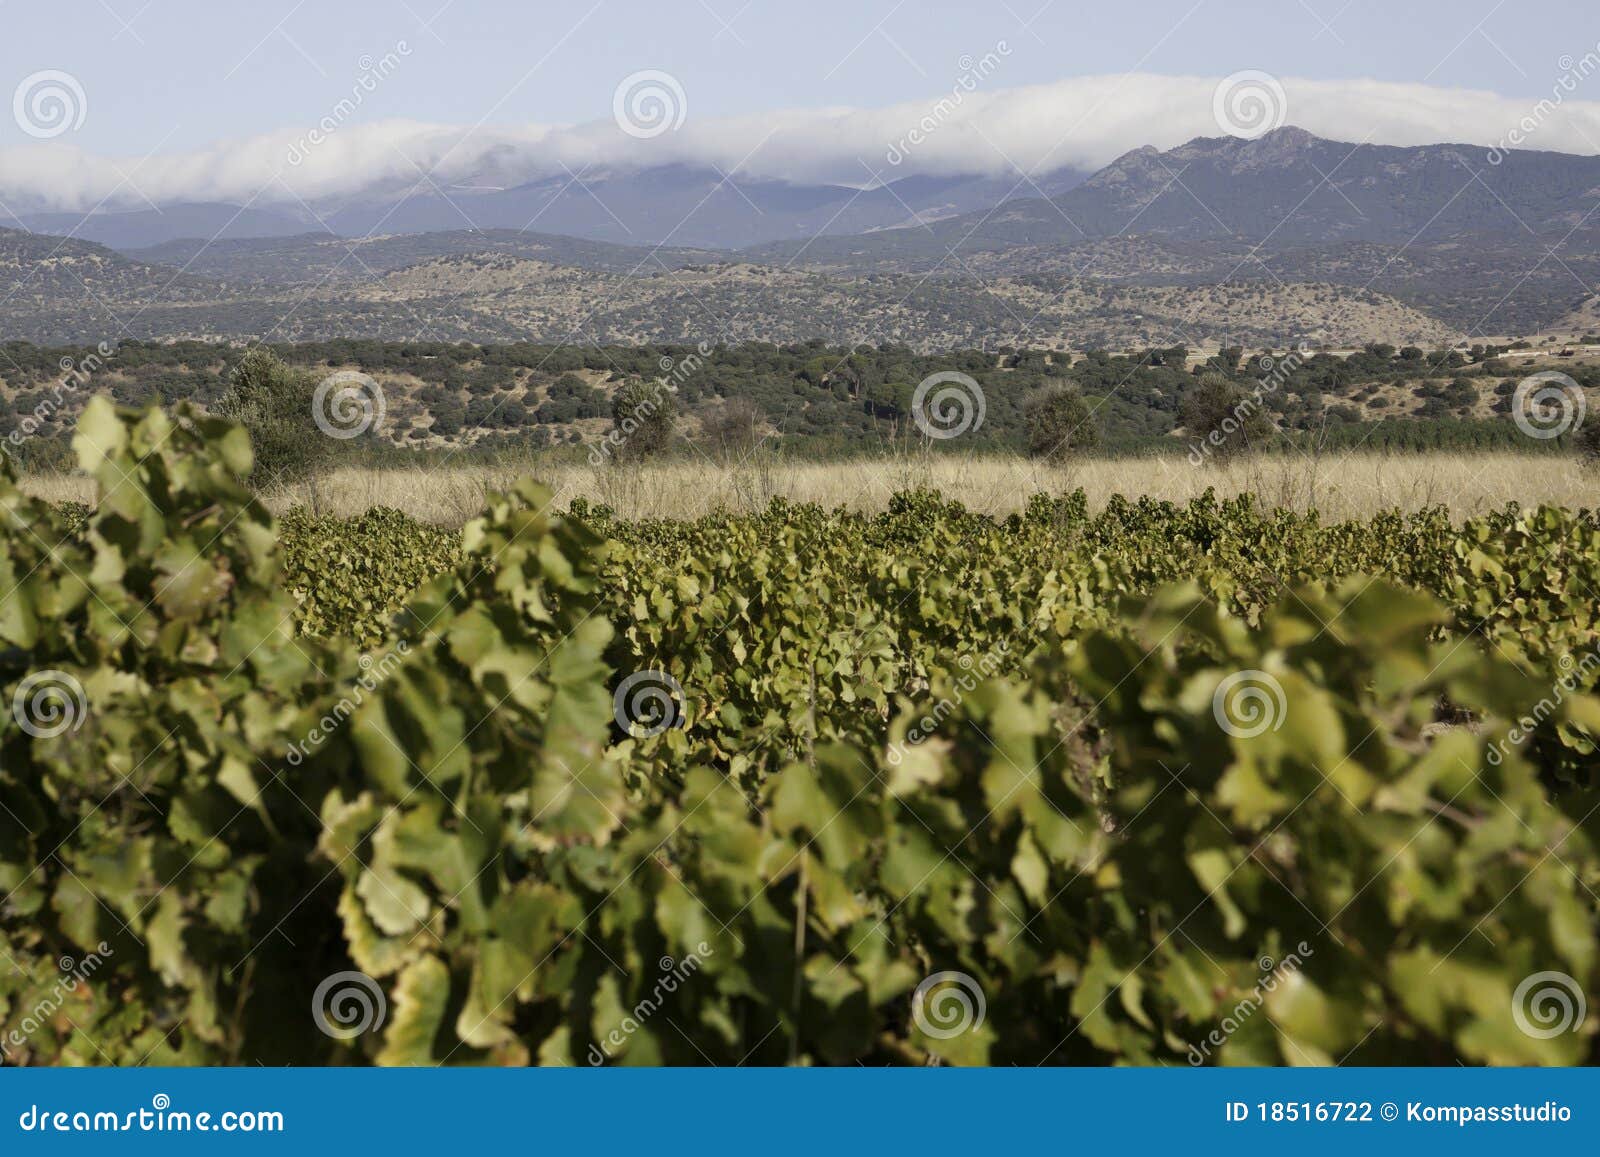 vineyards of castile-la mancha